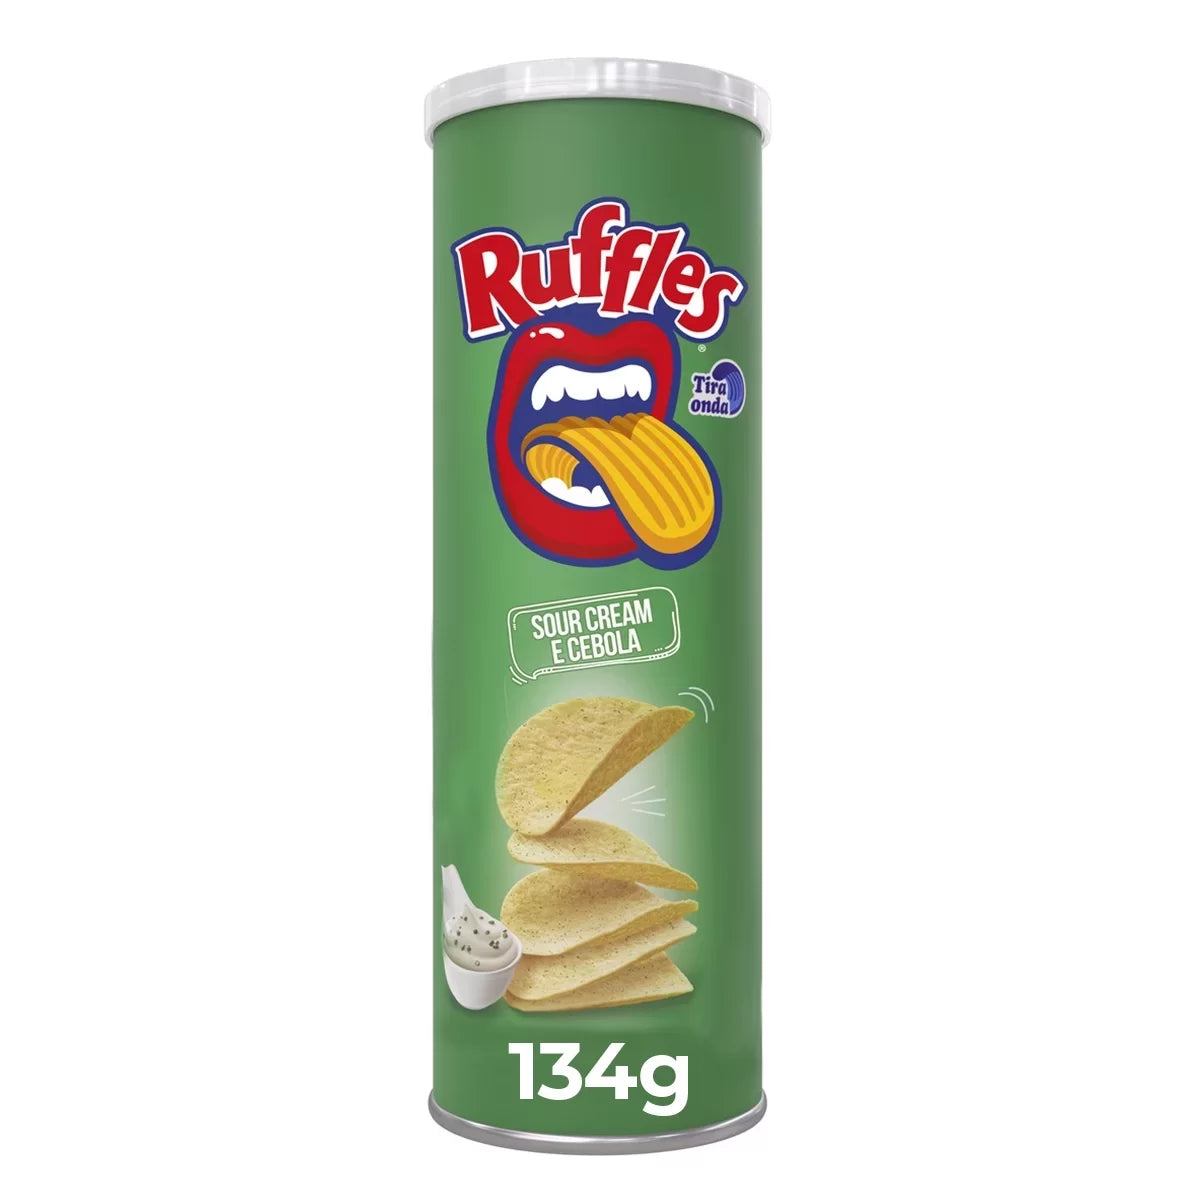 Ruffles Sour Cream and Onion Tube  134g - Brazil